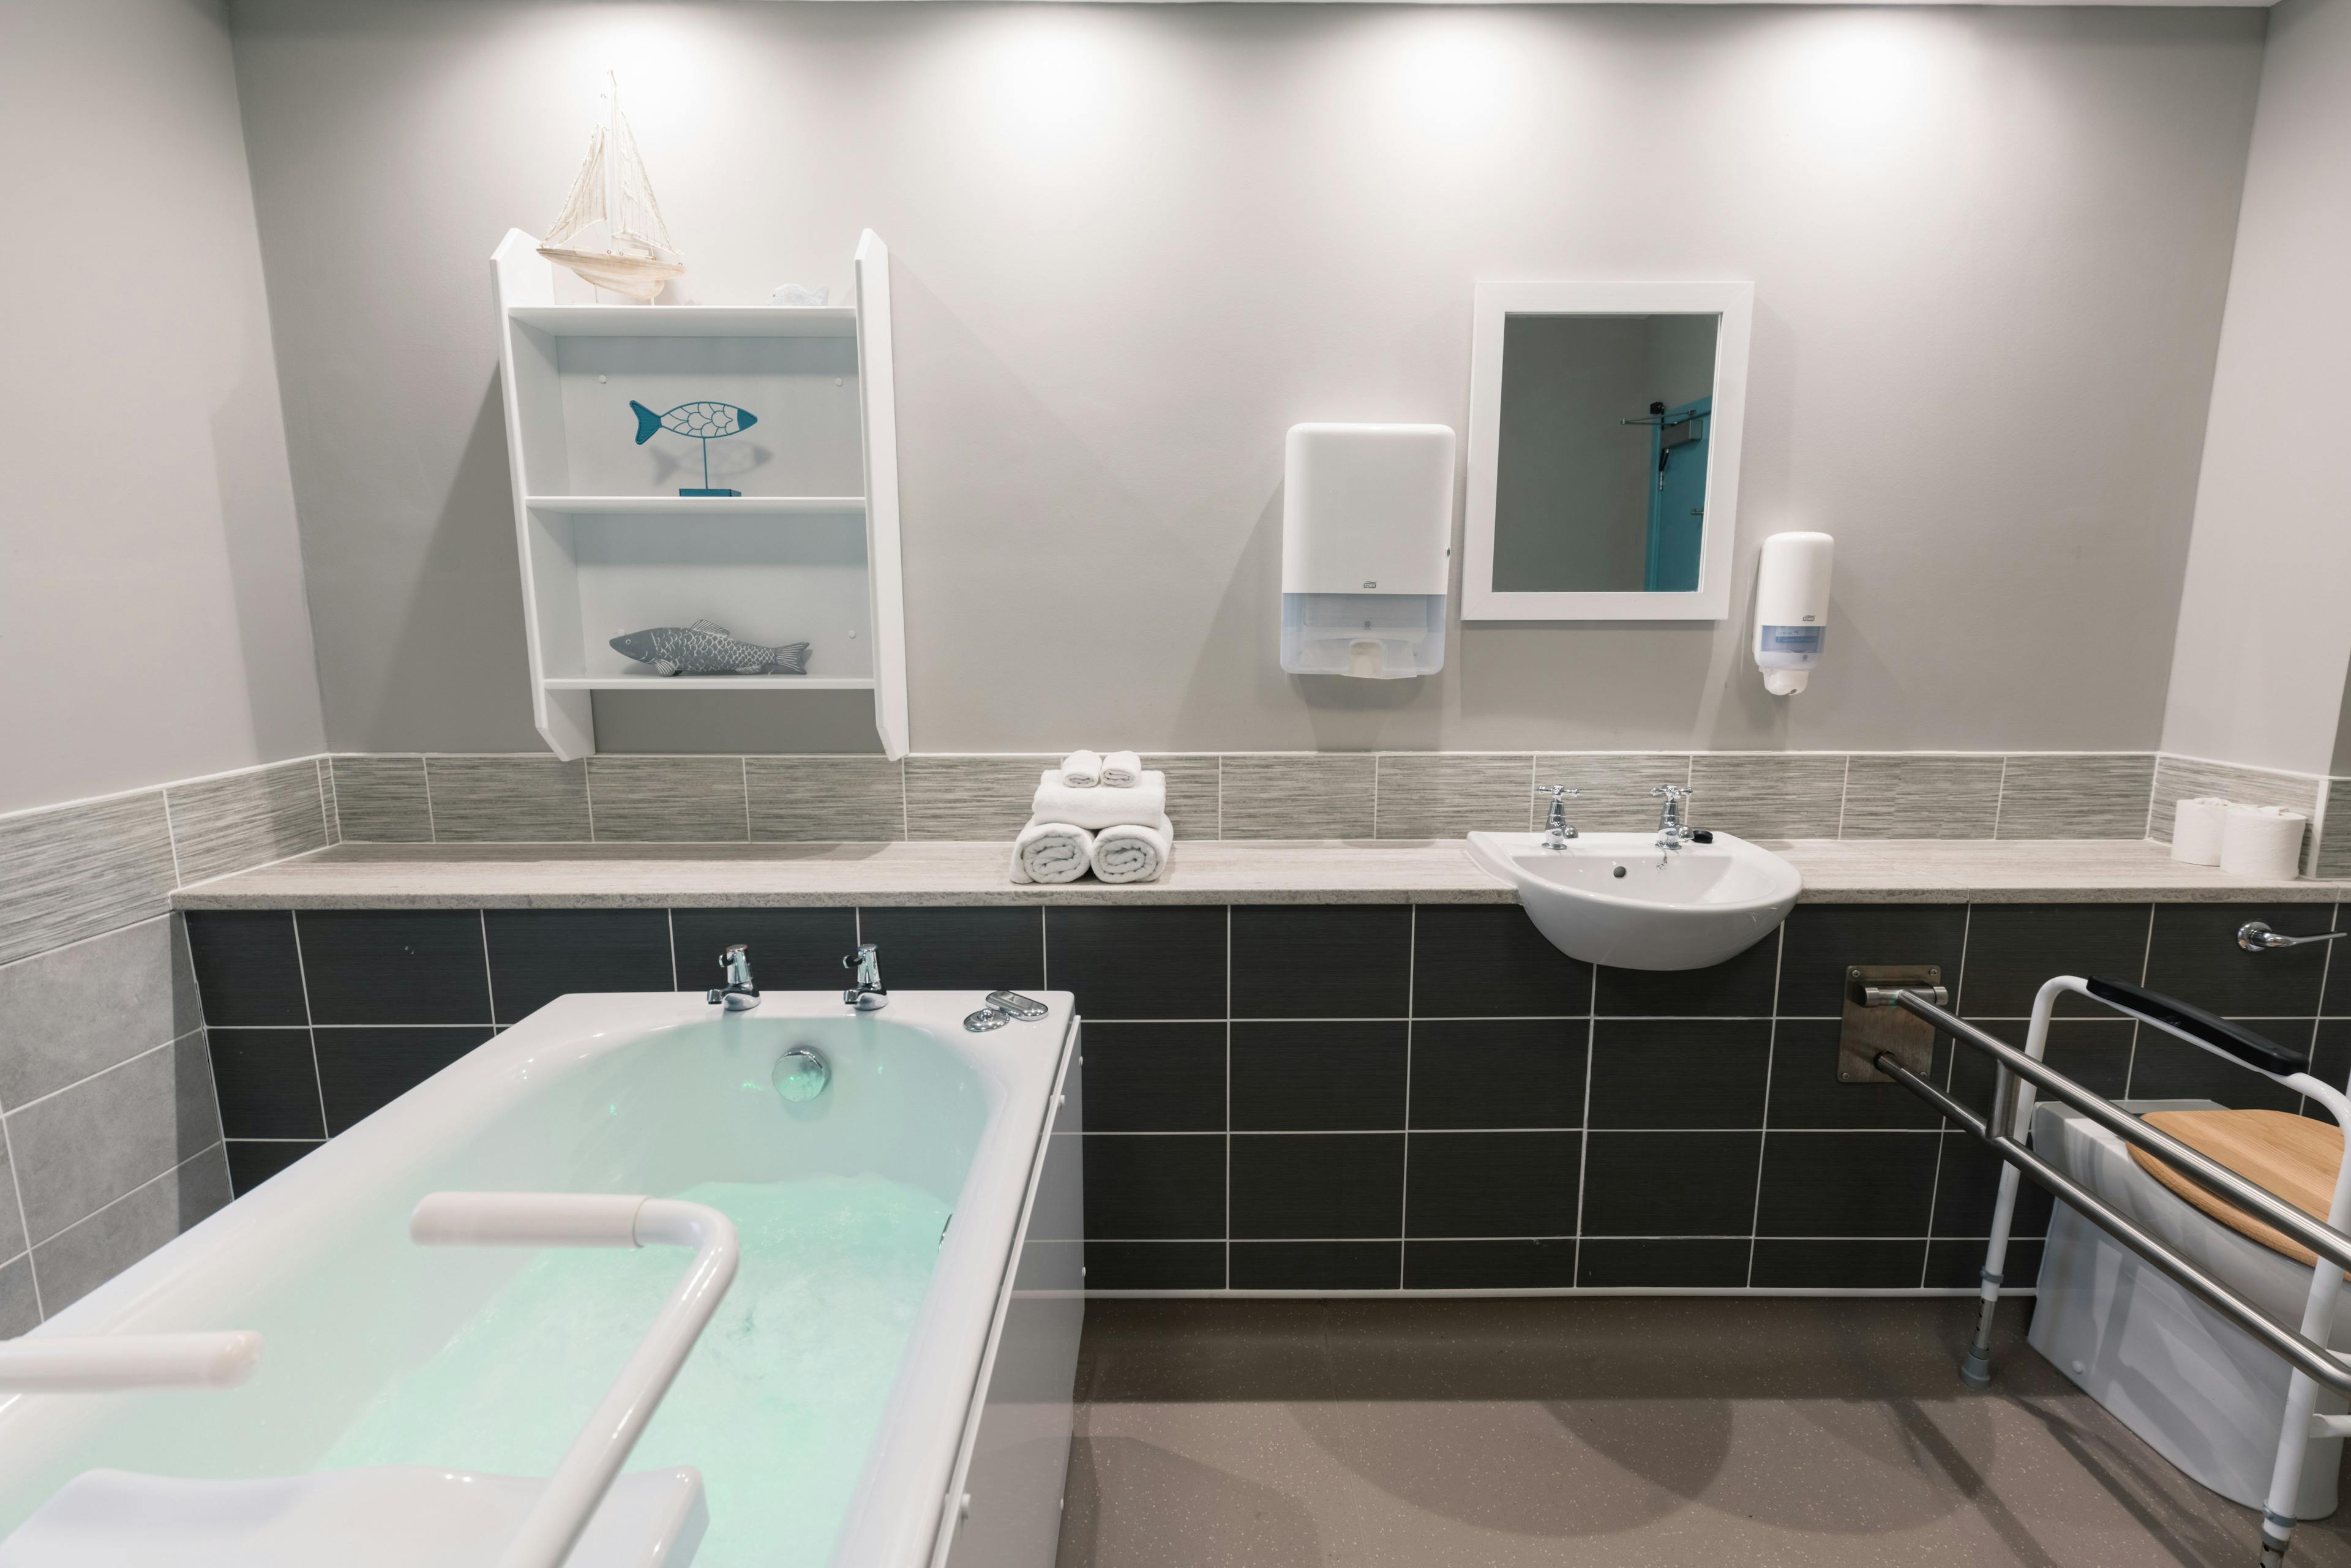 Spa Bathroom at Strachan House Care Home in Edinburgh, Scotland